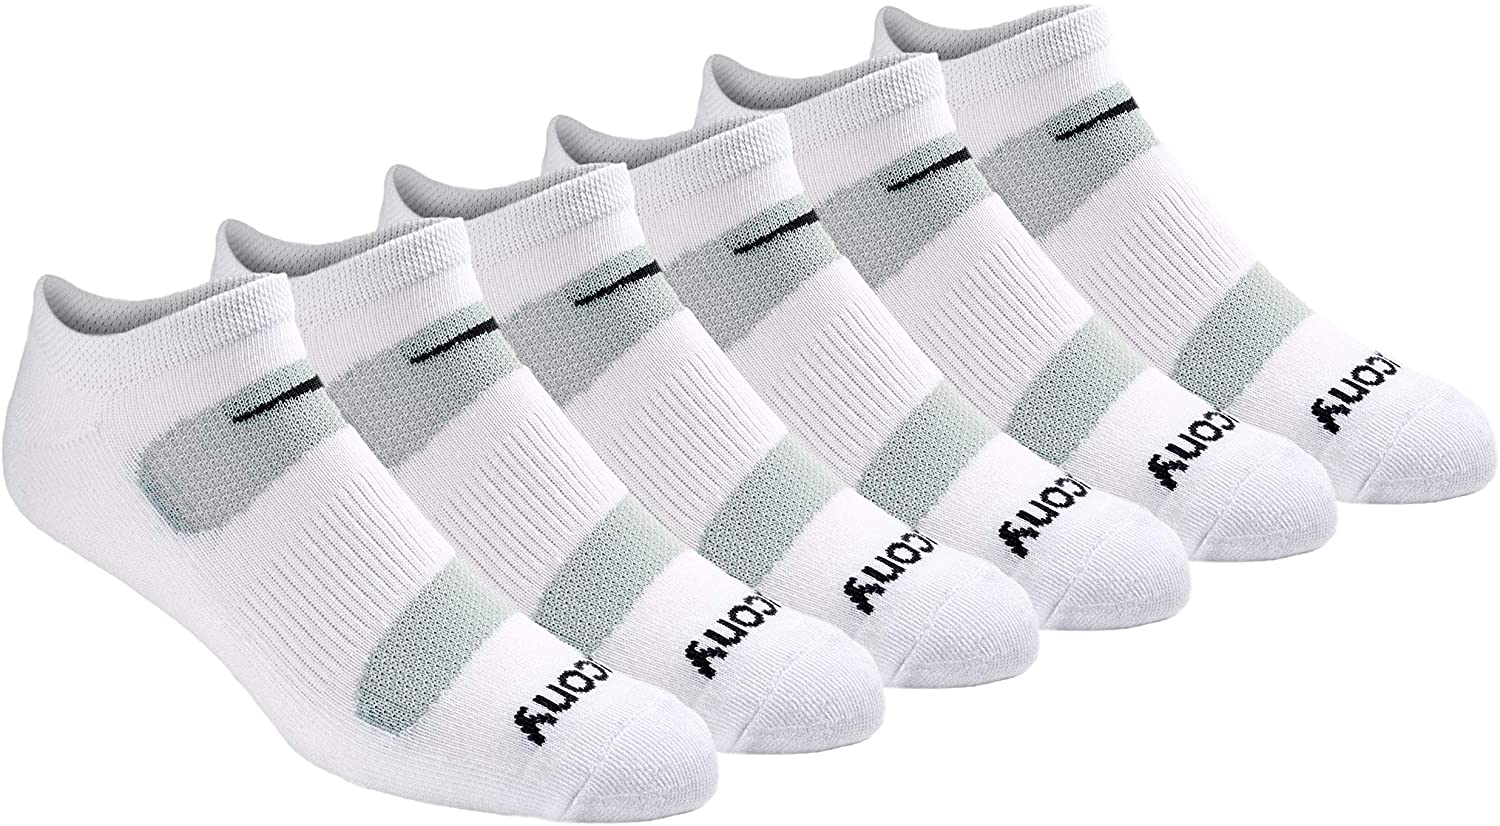 Saucony Mesh Comfort Fit Performance No-Show White Men's Socks (6 Pairs)